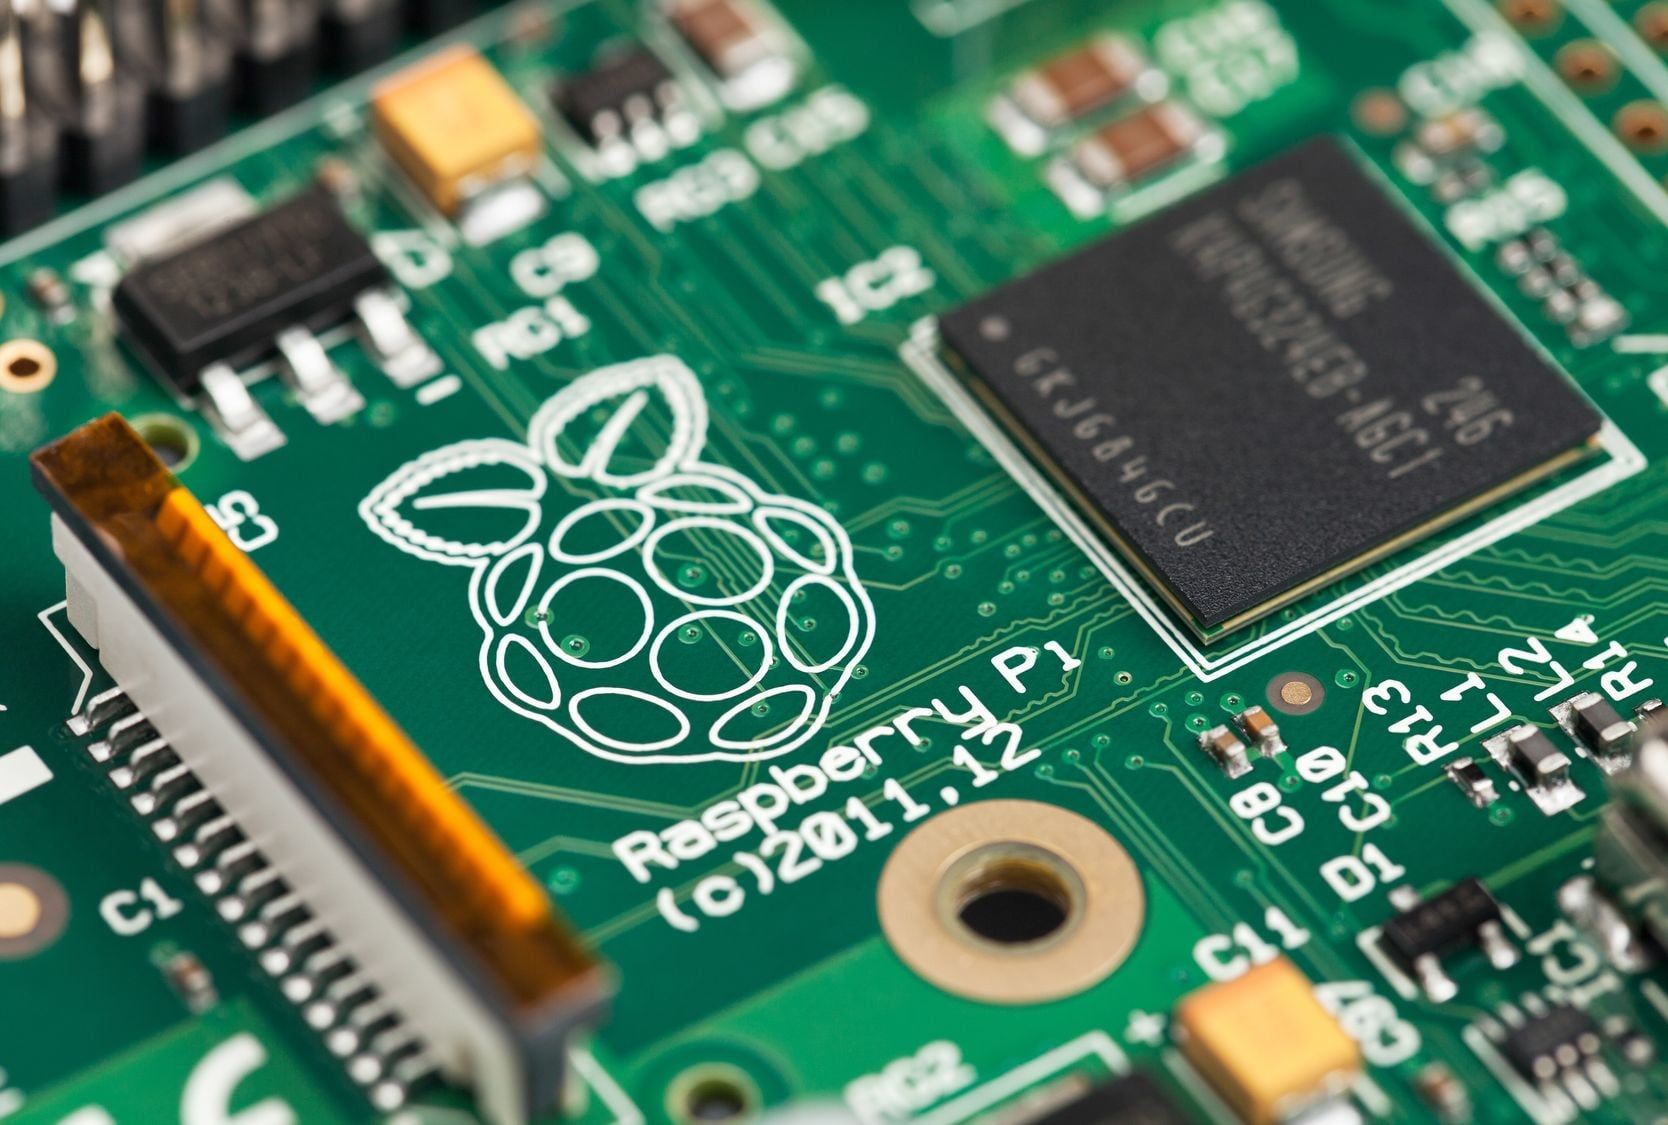 Raspbian For Raspberry Pi Gets a Visual Upgrade Via 'PIXEL'